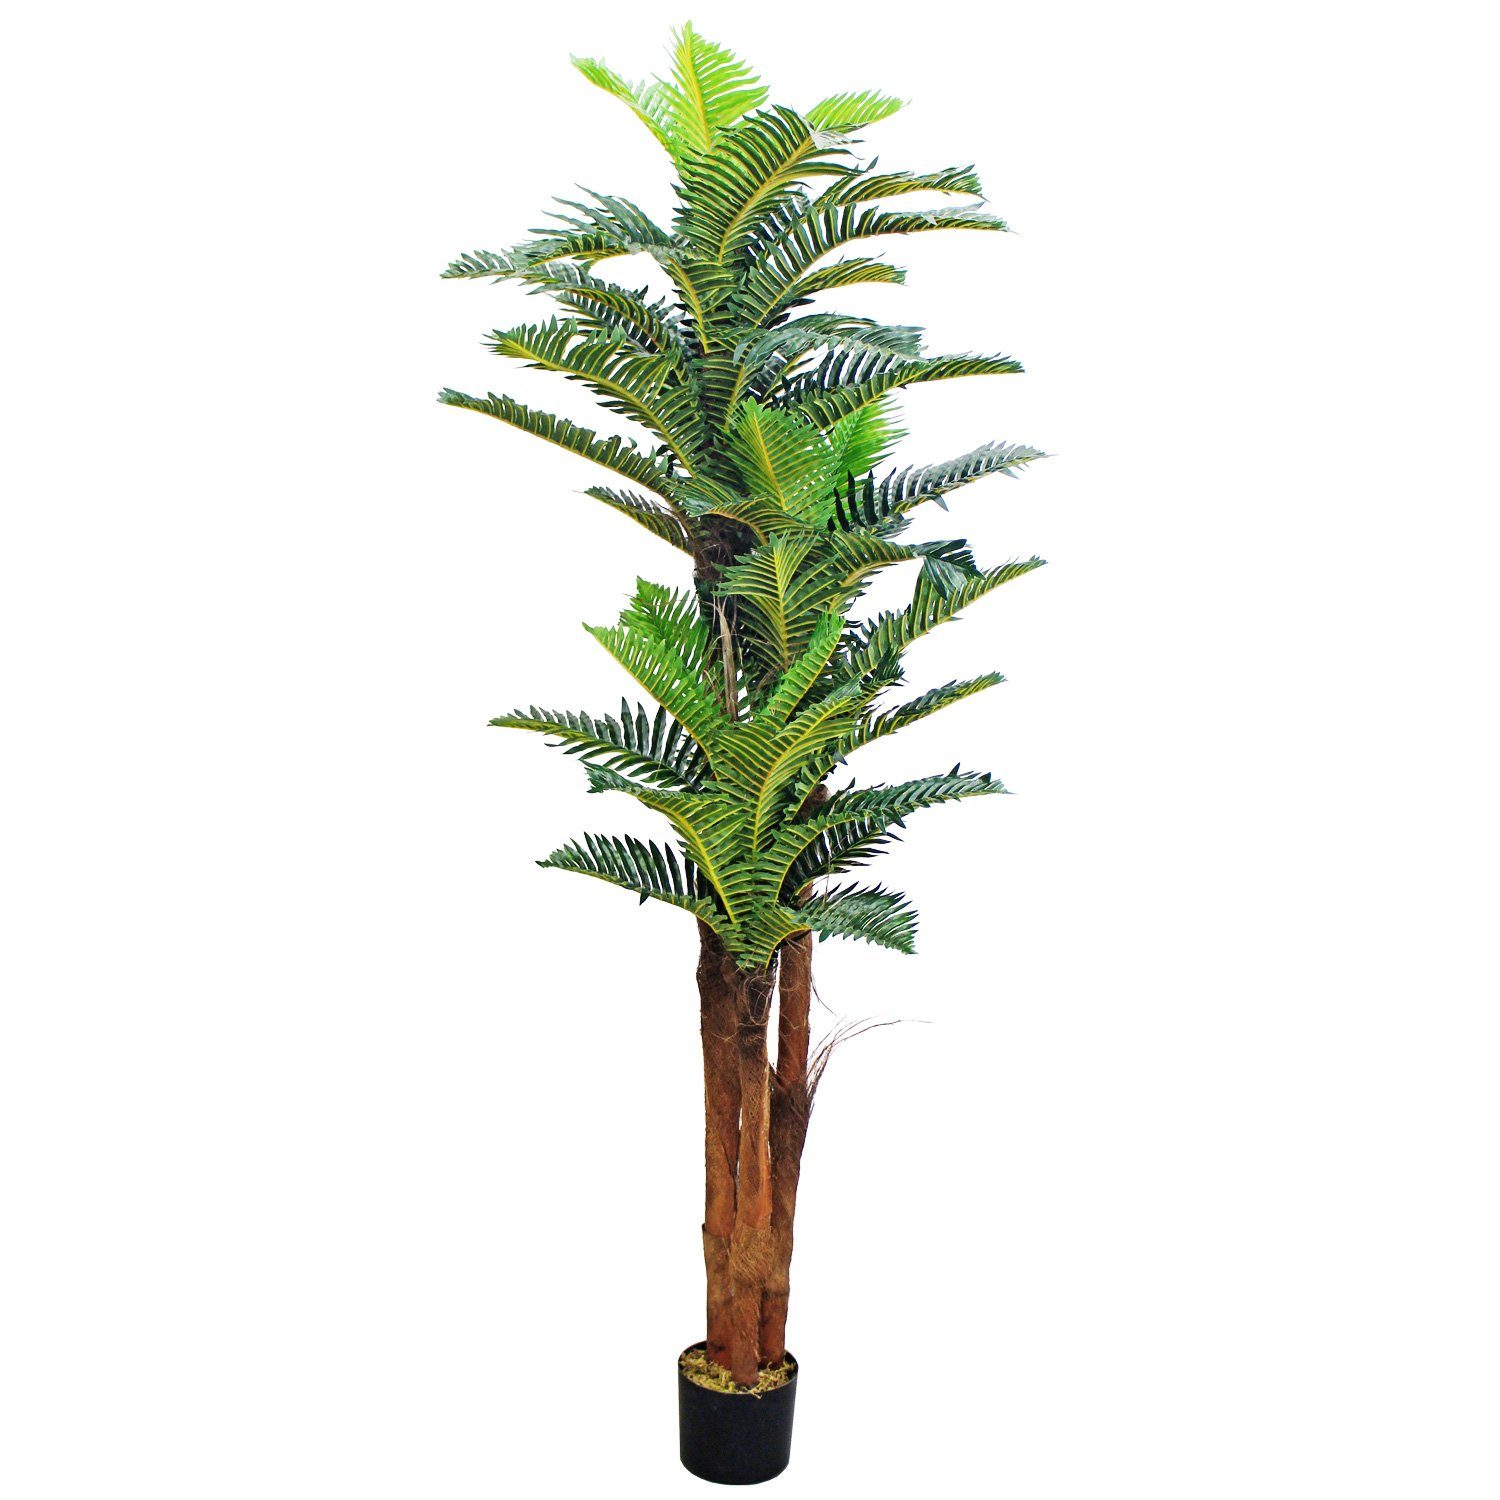 Kunstpflanze Palmenbaum Kokos Palme Kunstpflanze Künstliche Pflanze Echtholz 180cm Decovego, Decovego